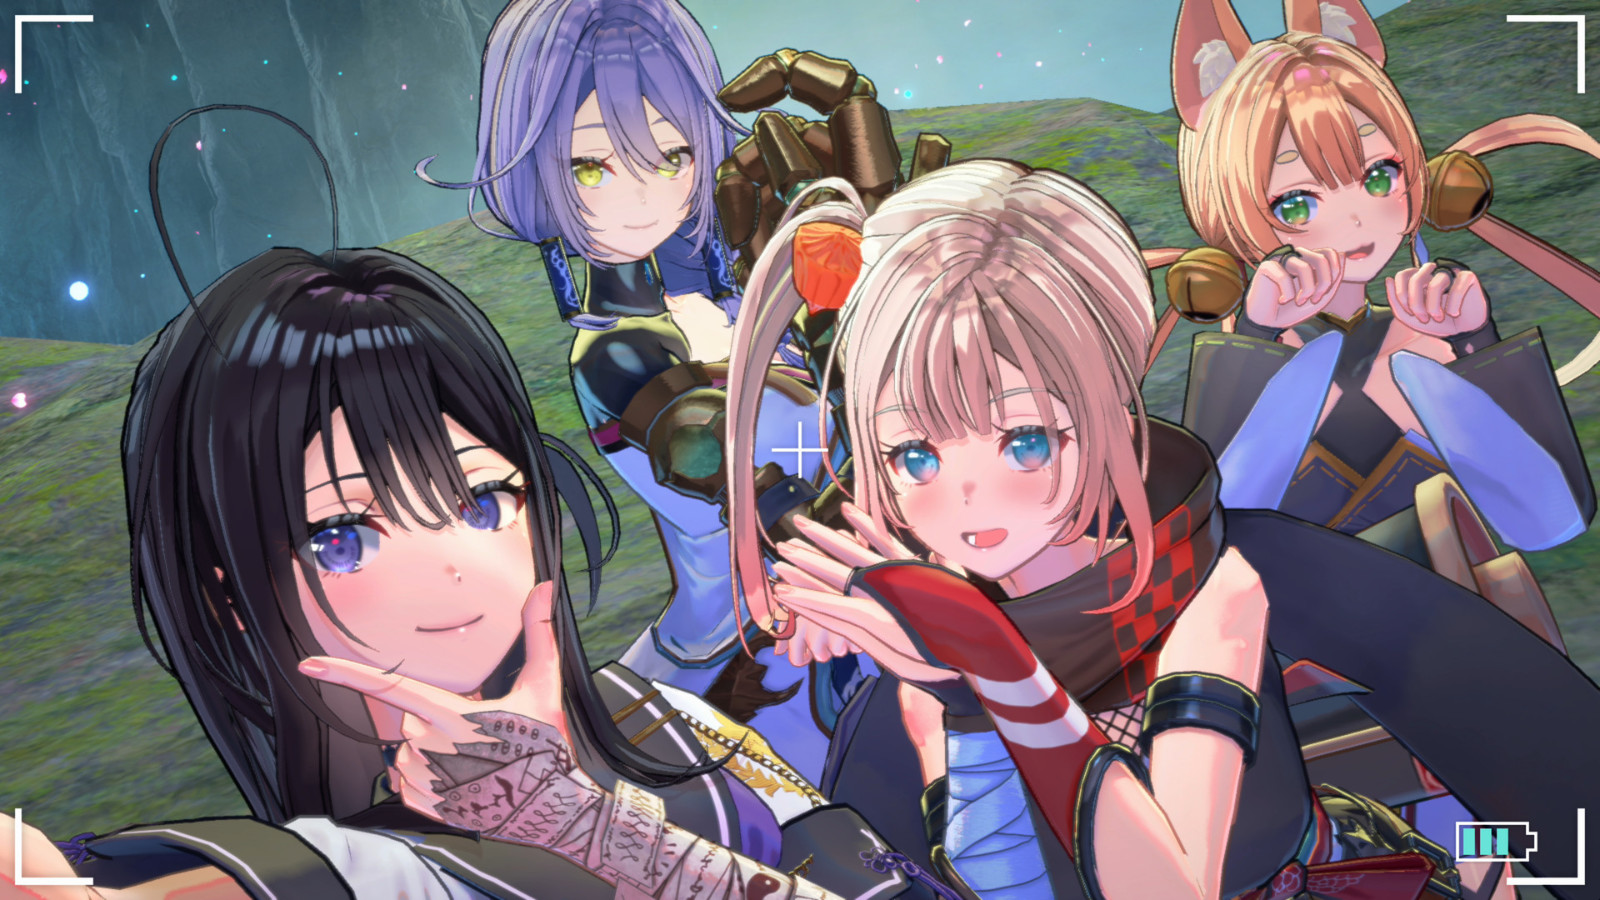 Steam版《武士少女》12月1日開啟預售 預購九折特惠